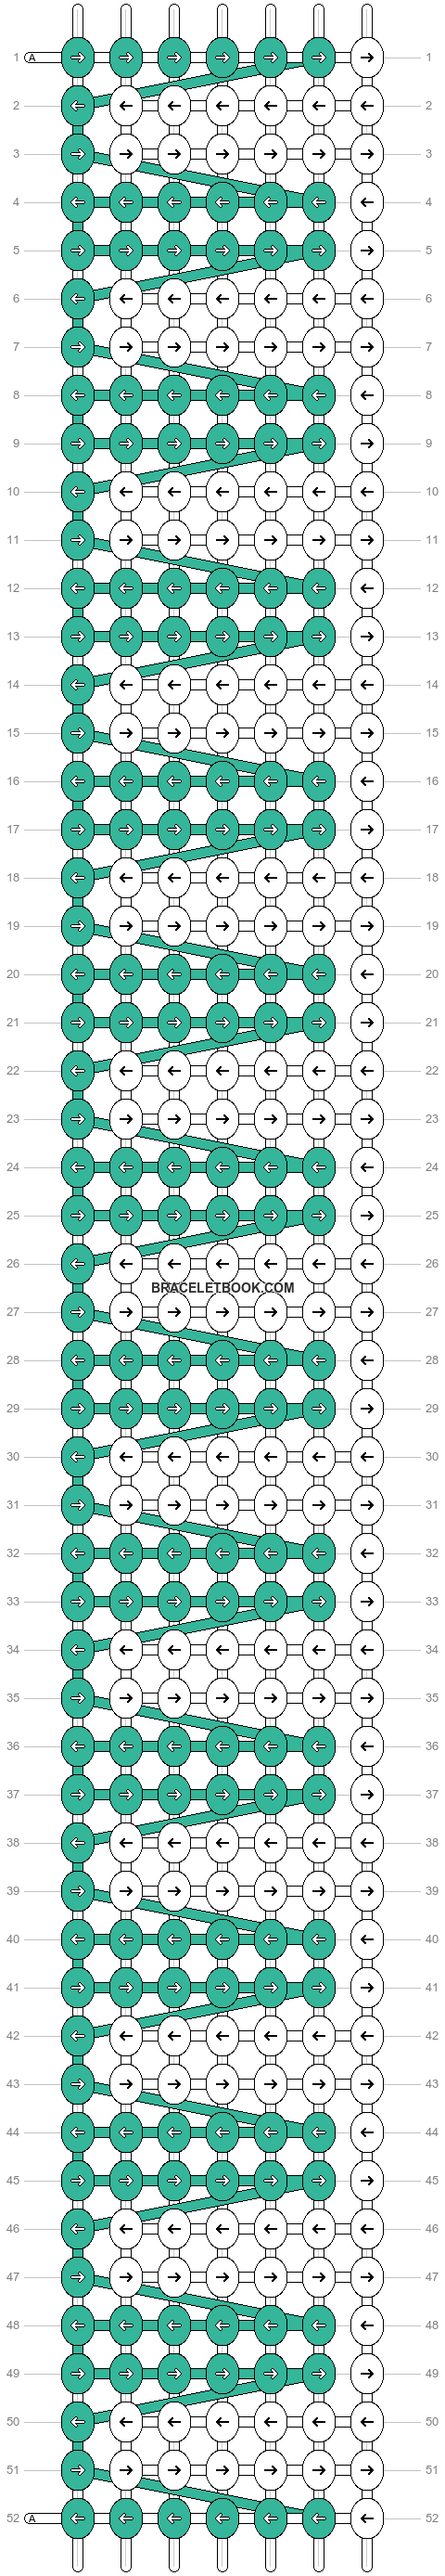 Alpha pattern #15234 variation #41249 pattern